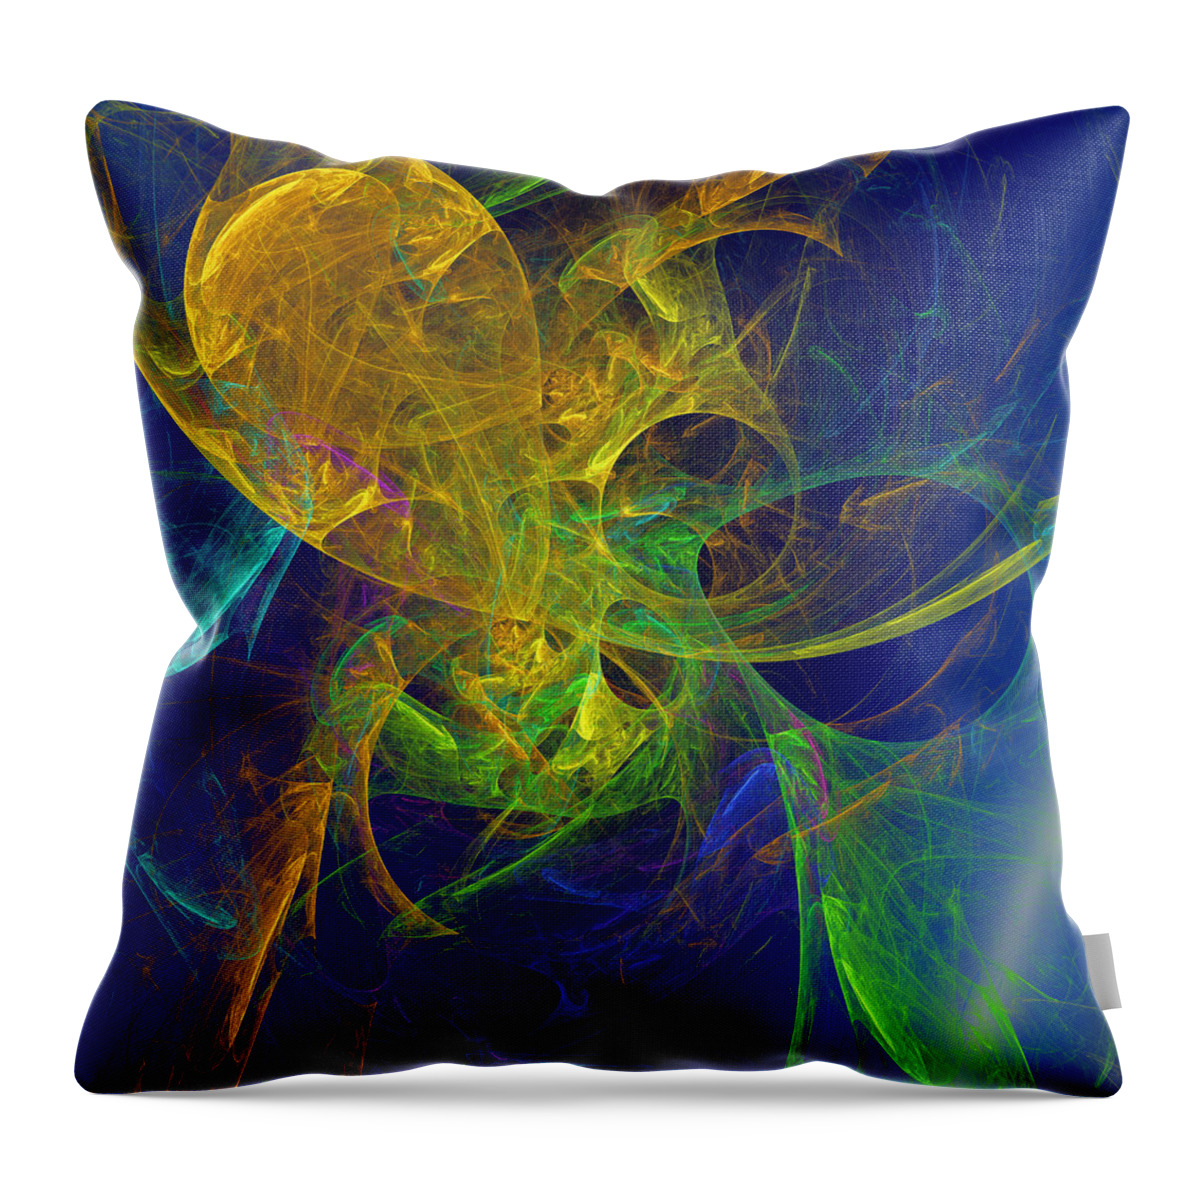 Art Throw Pillow featuring the digital art Sunshine by Jeff Iverson